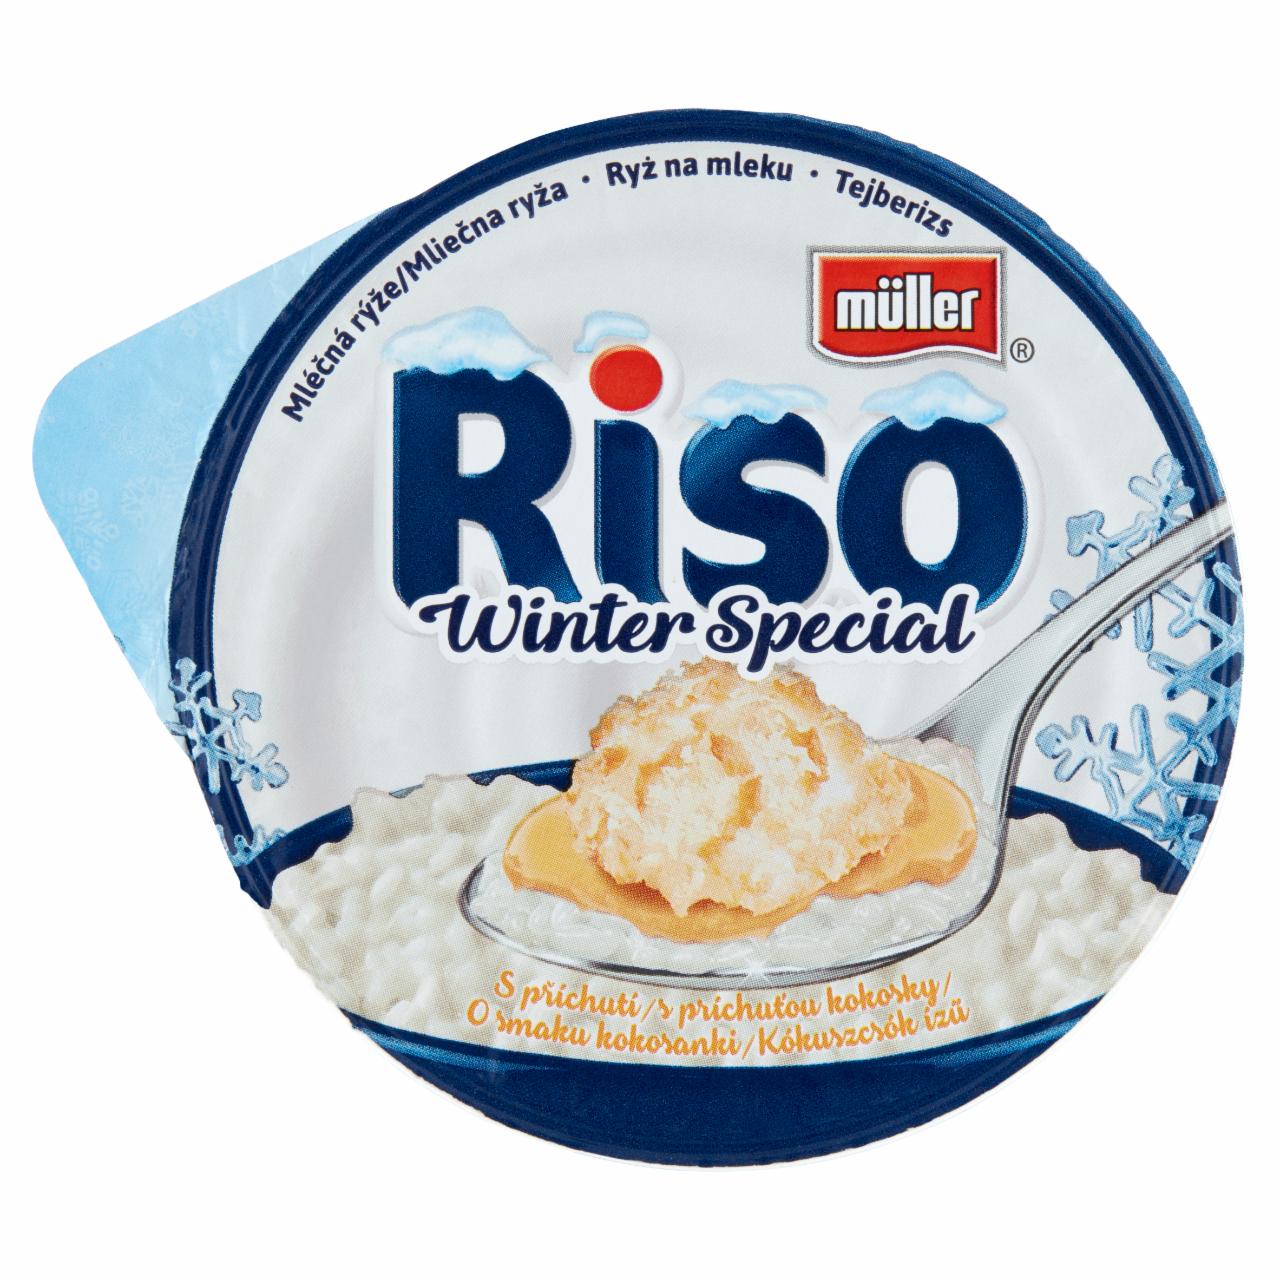 Zdjęcia - Müller Riso Winter Special Ryż na mleku o smaku kokosanki 175 g